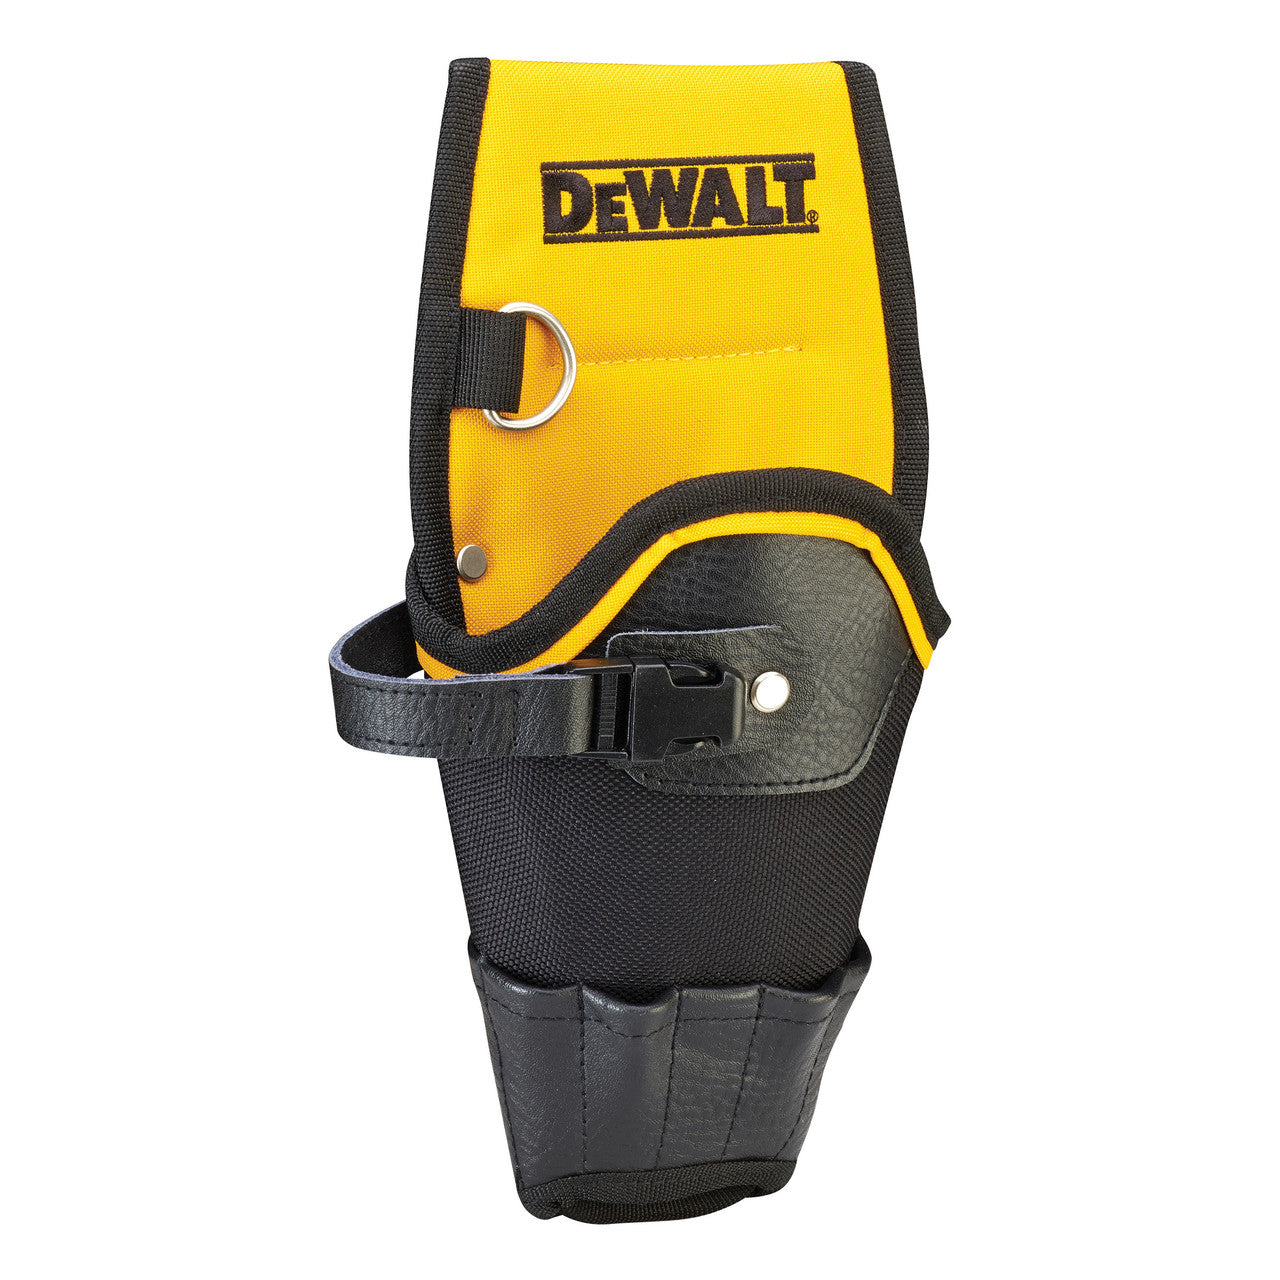 Dewalt DWST1-75653 Drill Holster for Tool Belt